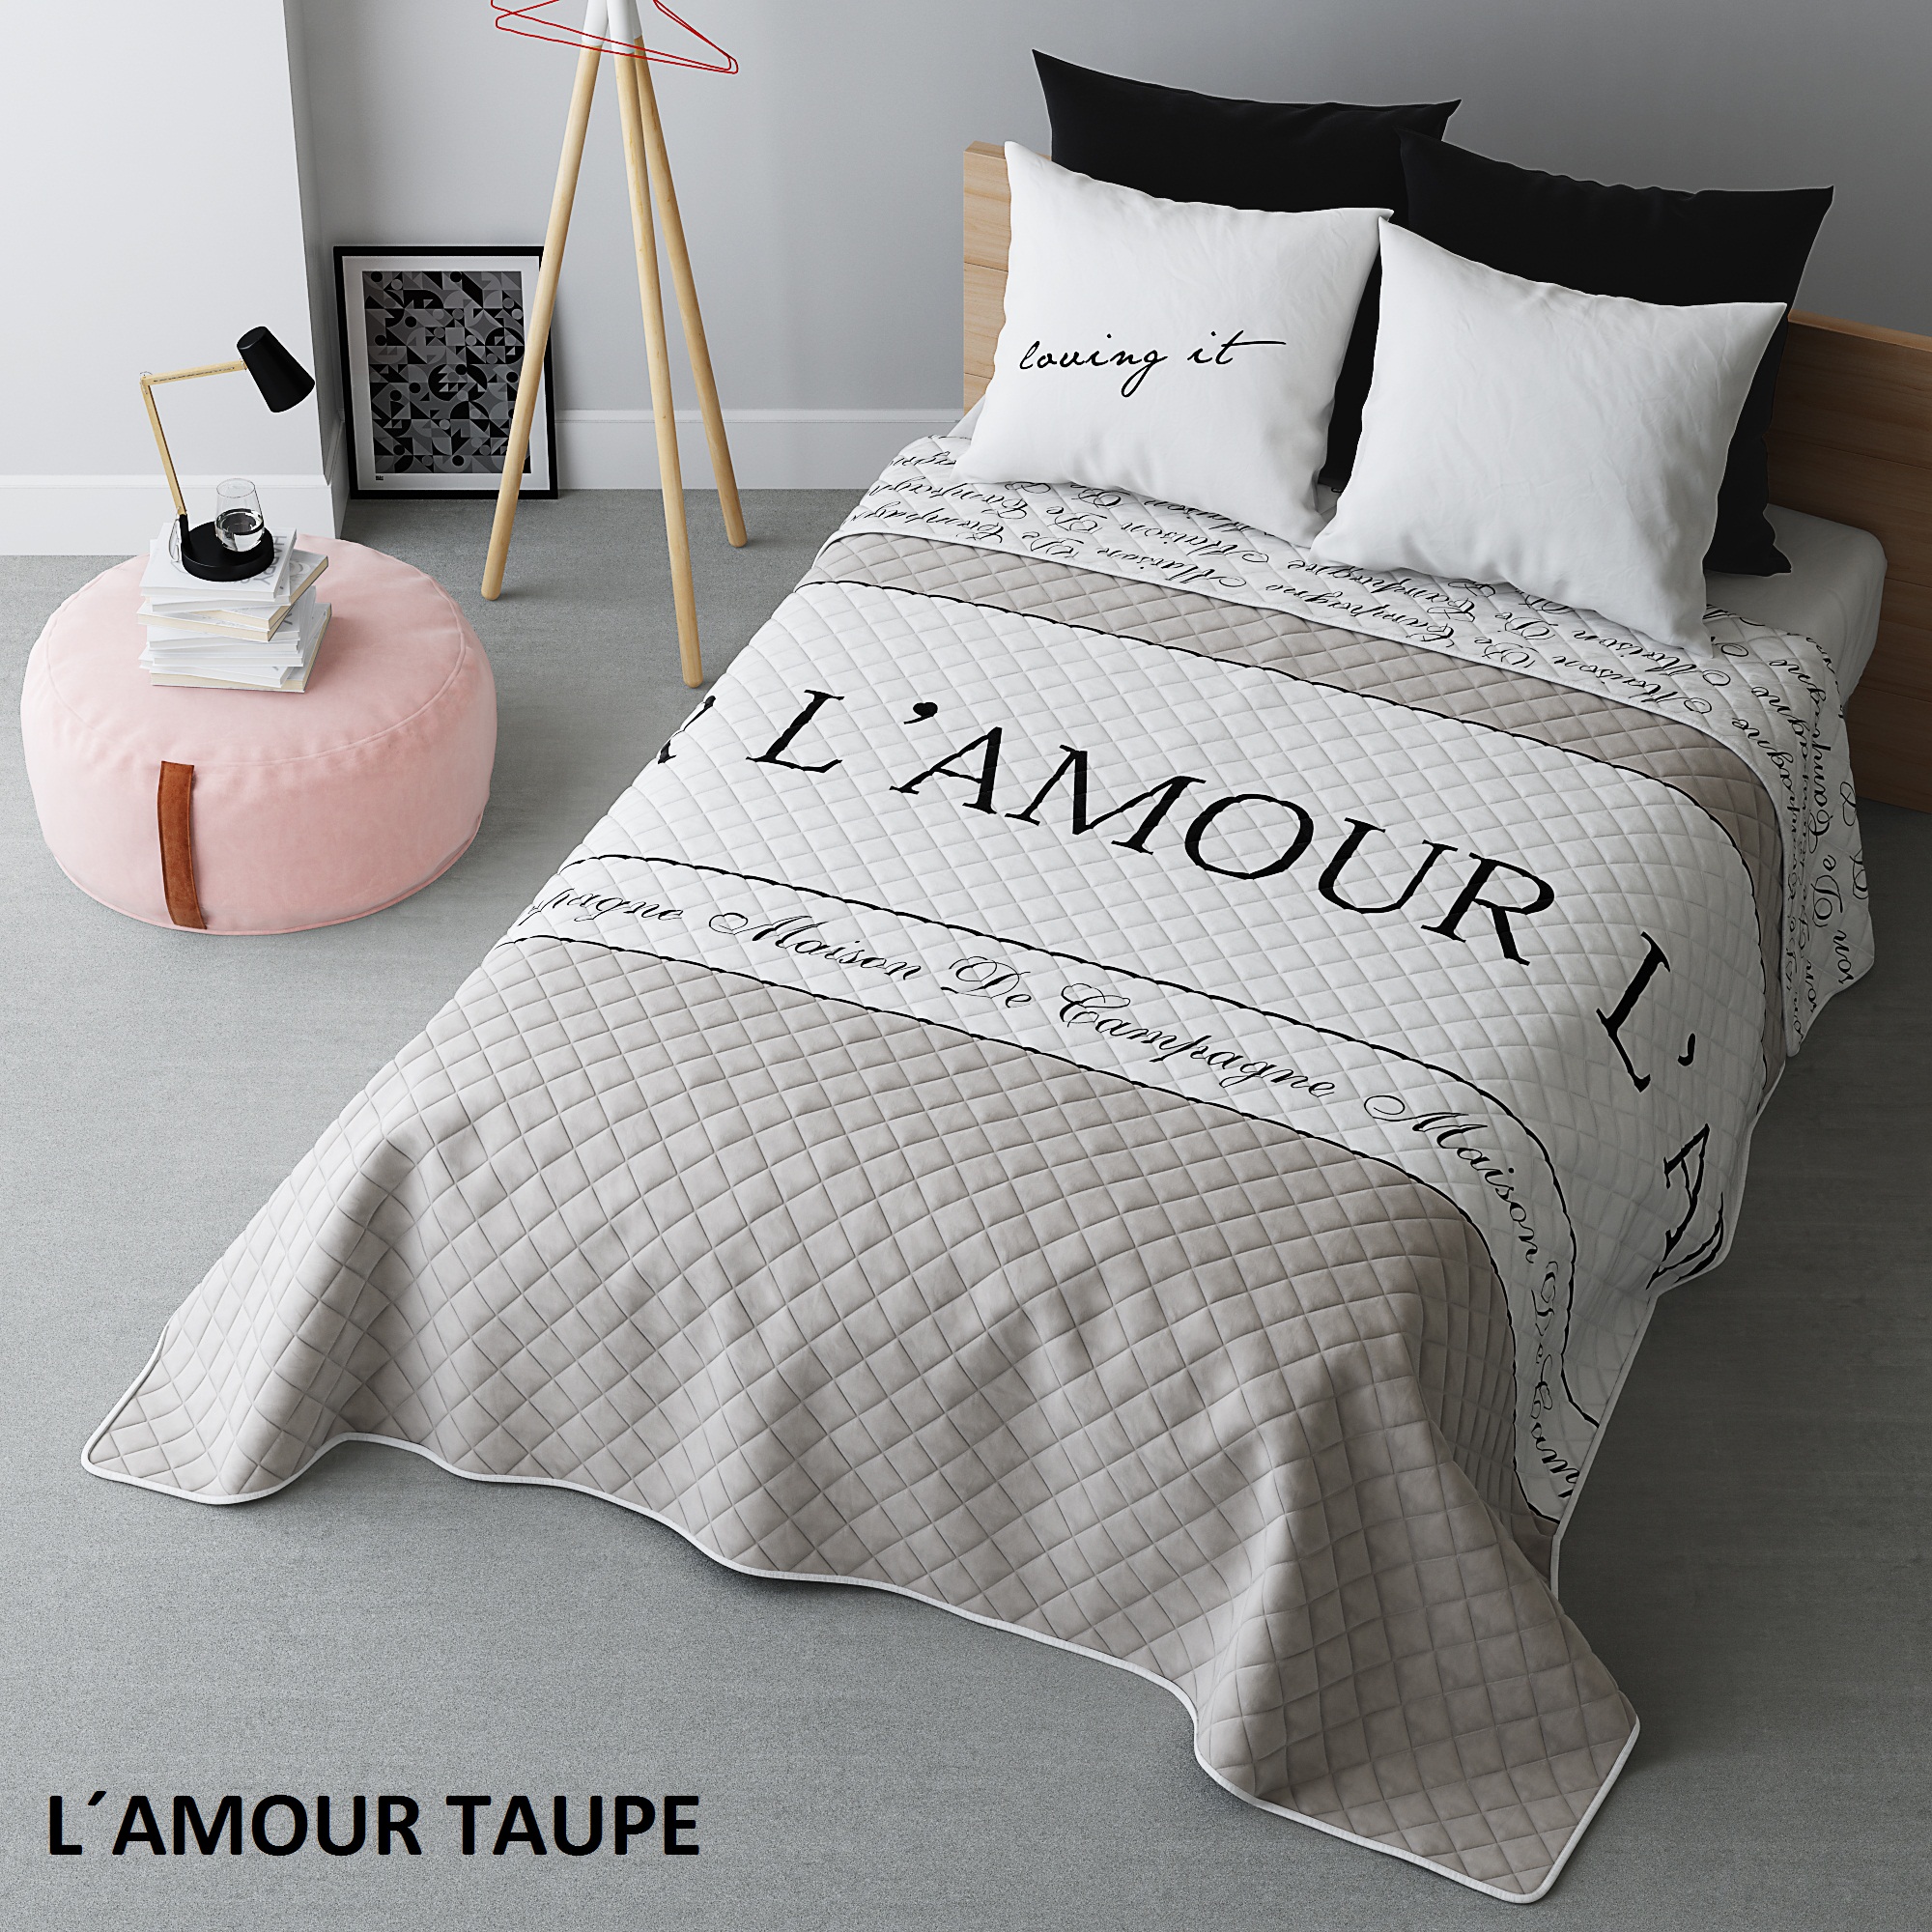 Elegancka pikowana francuska narzuta na łóżko koloru beżowego